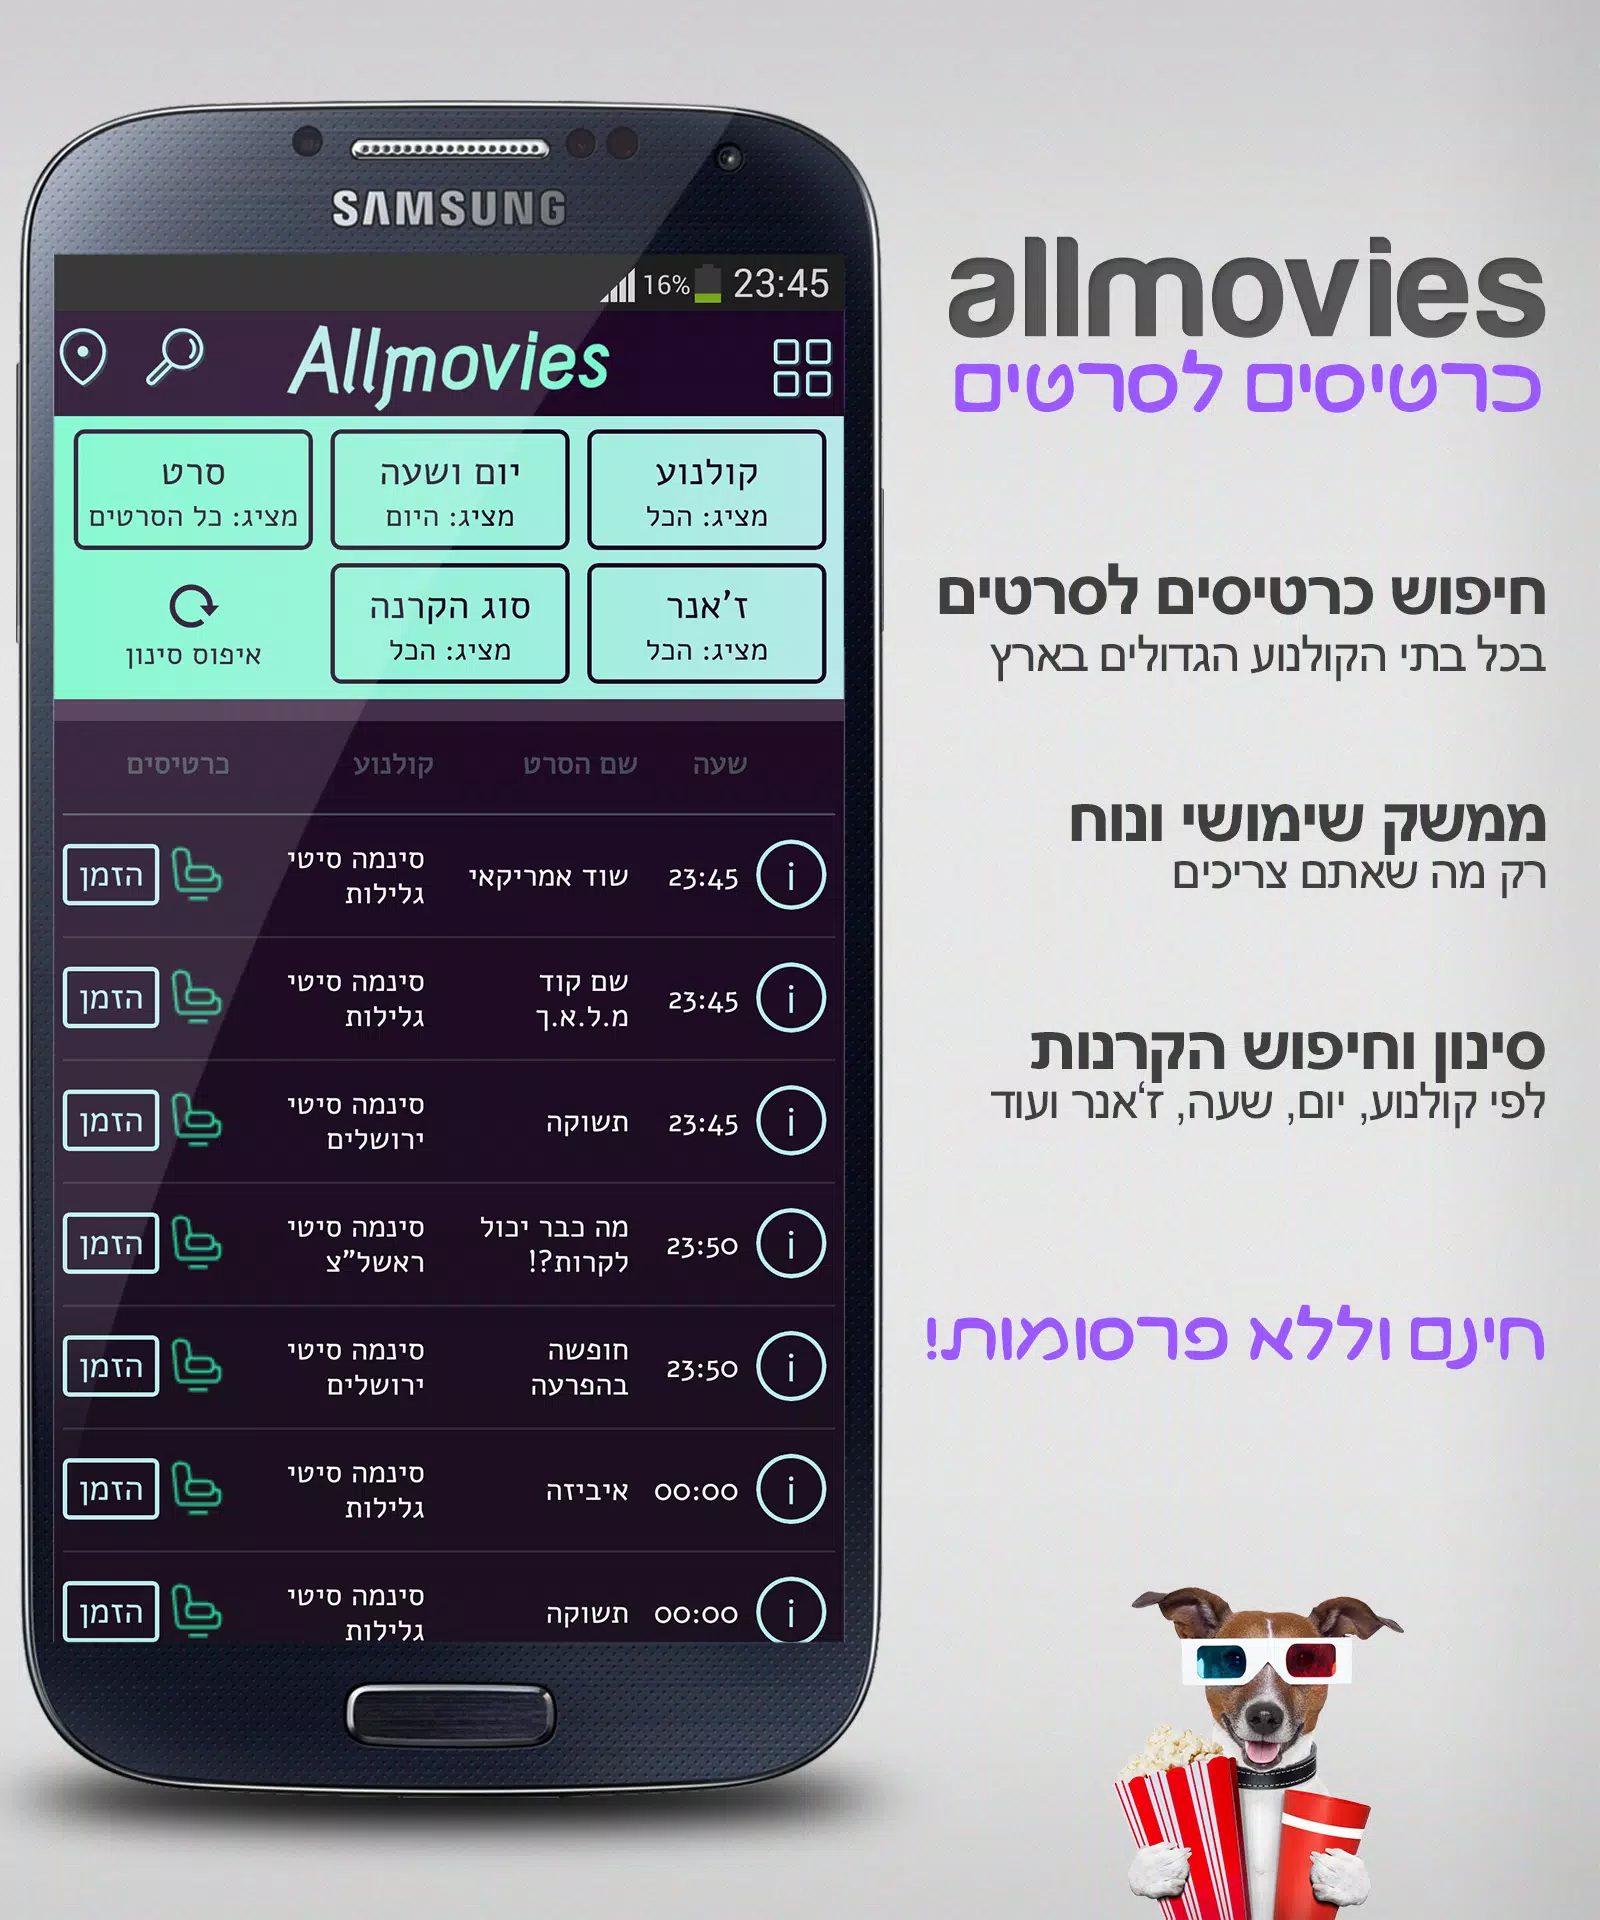 allmovies - כרטיסים לסרטים APK for Android Download